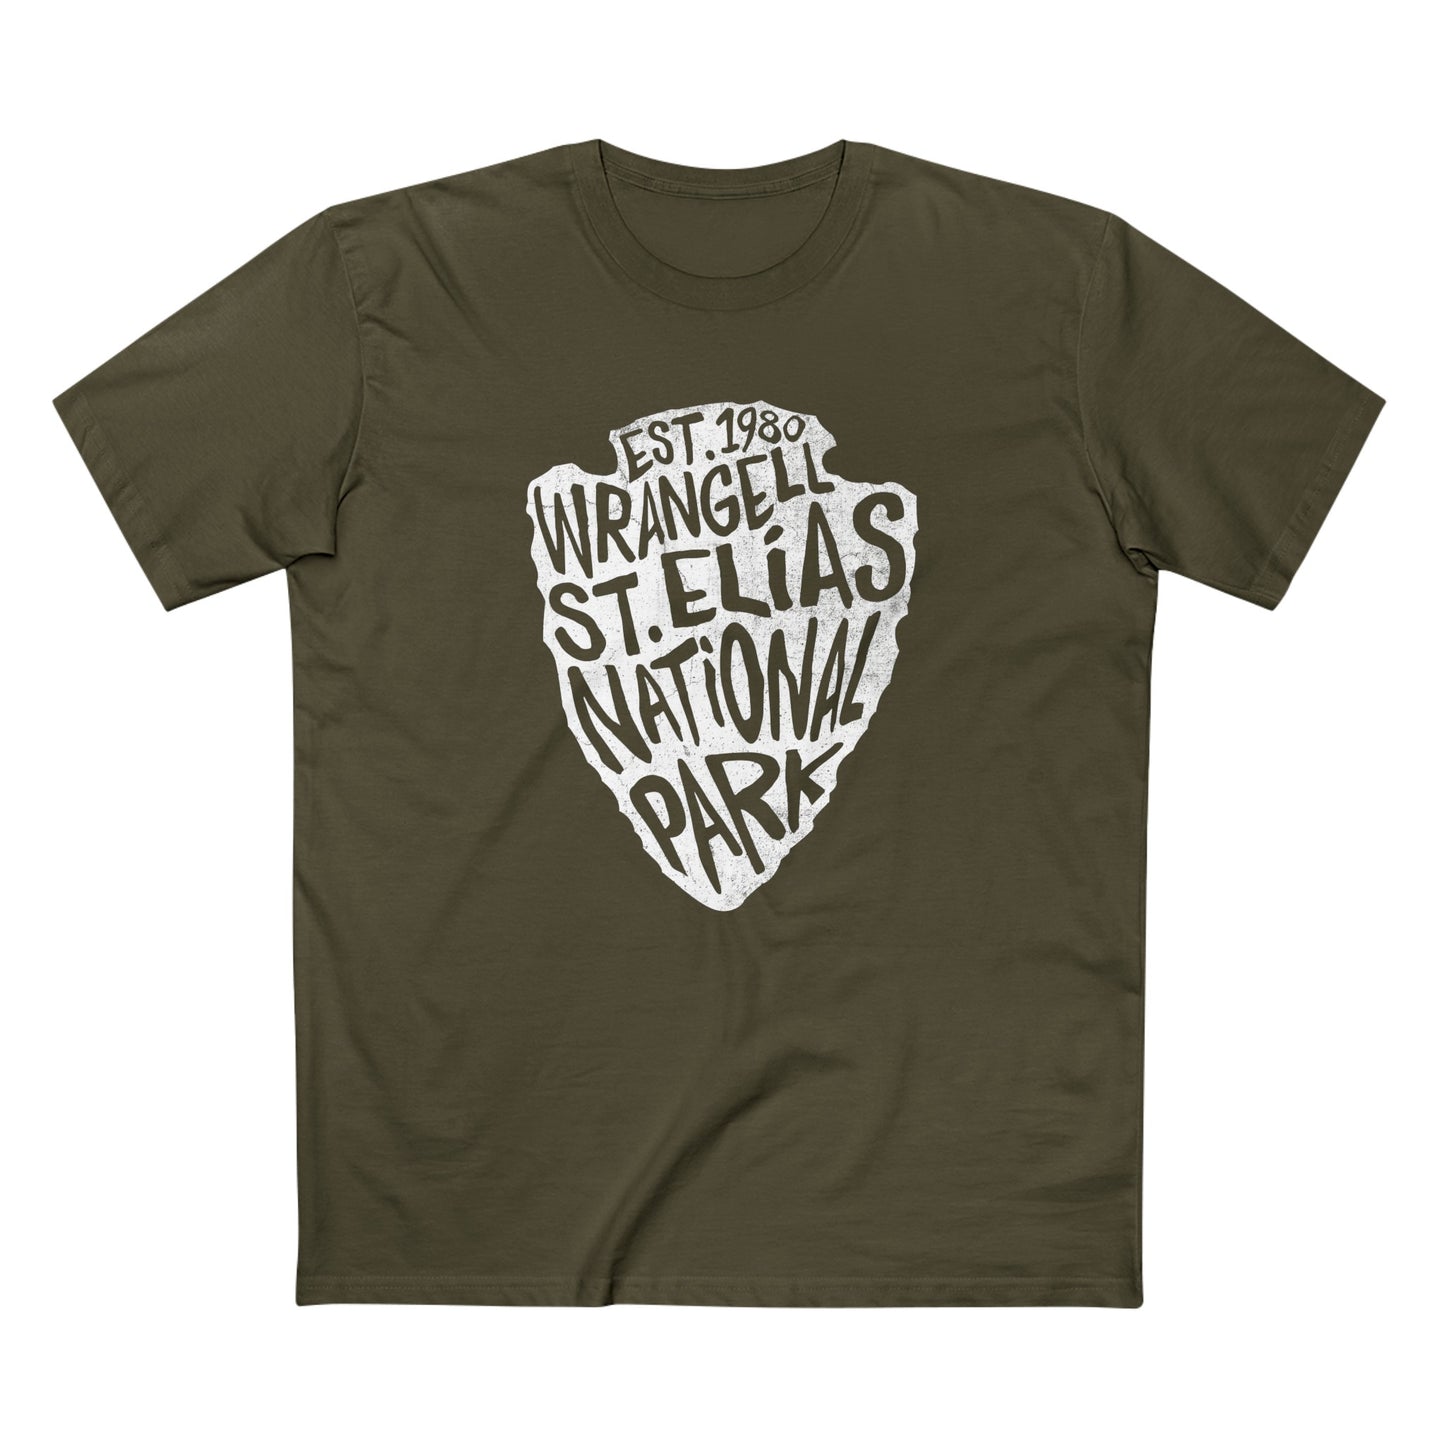 Wrangell St Elias National Park T-Shirt - Arrowhead Design